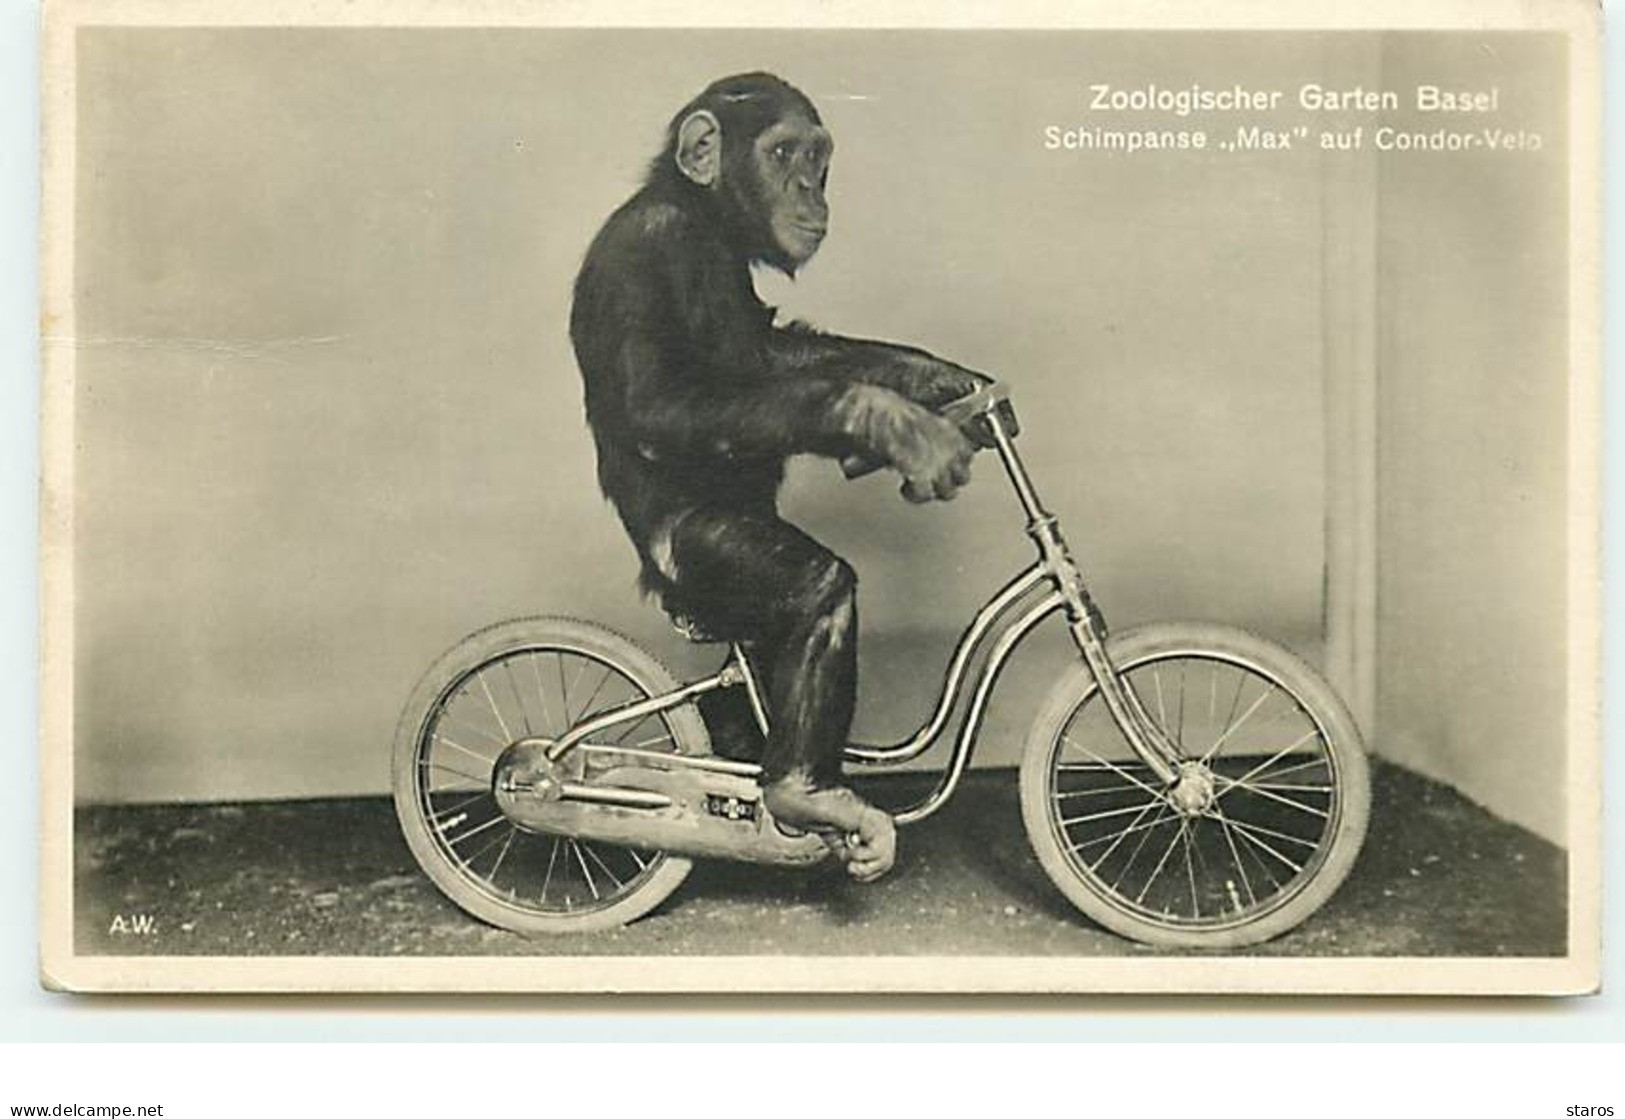 BALE - Zoologischer Garten Basel - Schimpanse Max Auf Condor-Velo - Singe - Chimpanzé - Basel